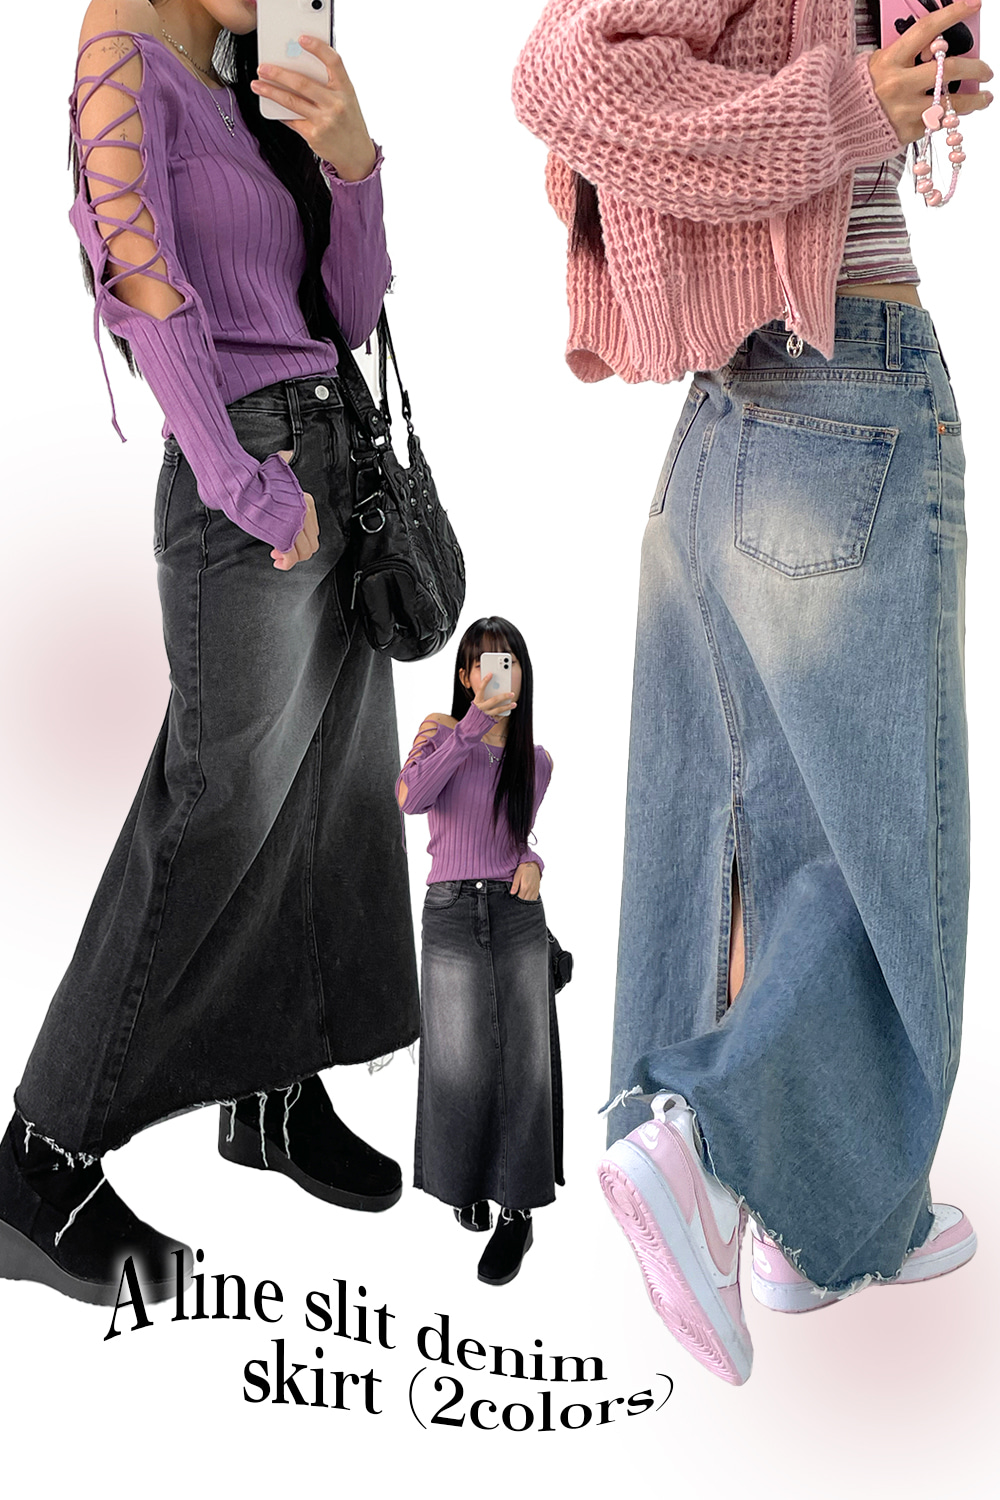 A line slit denim skirt (2colors)